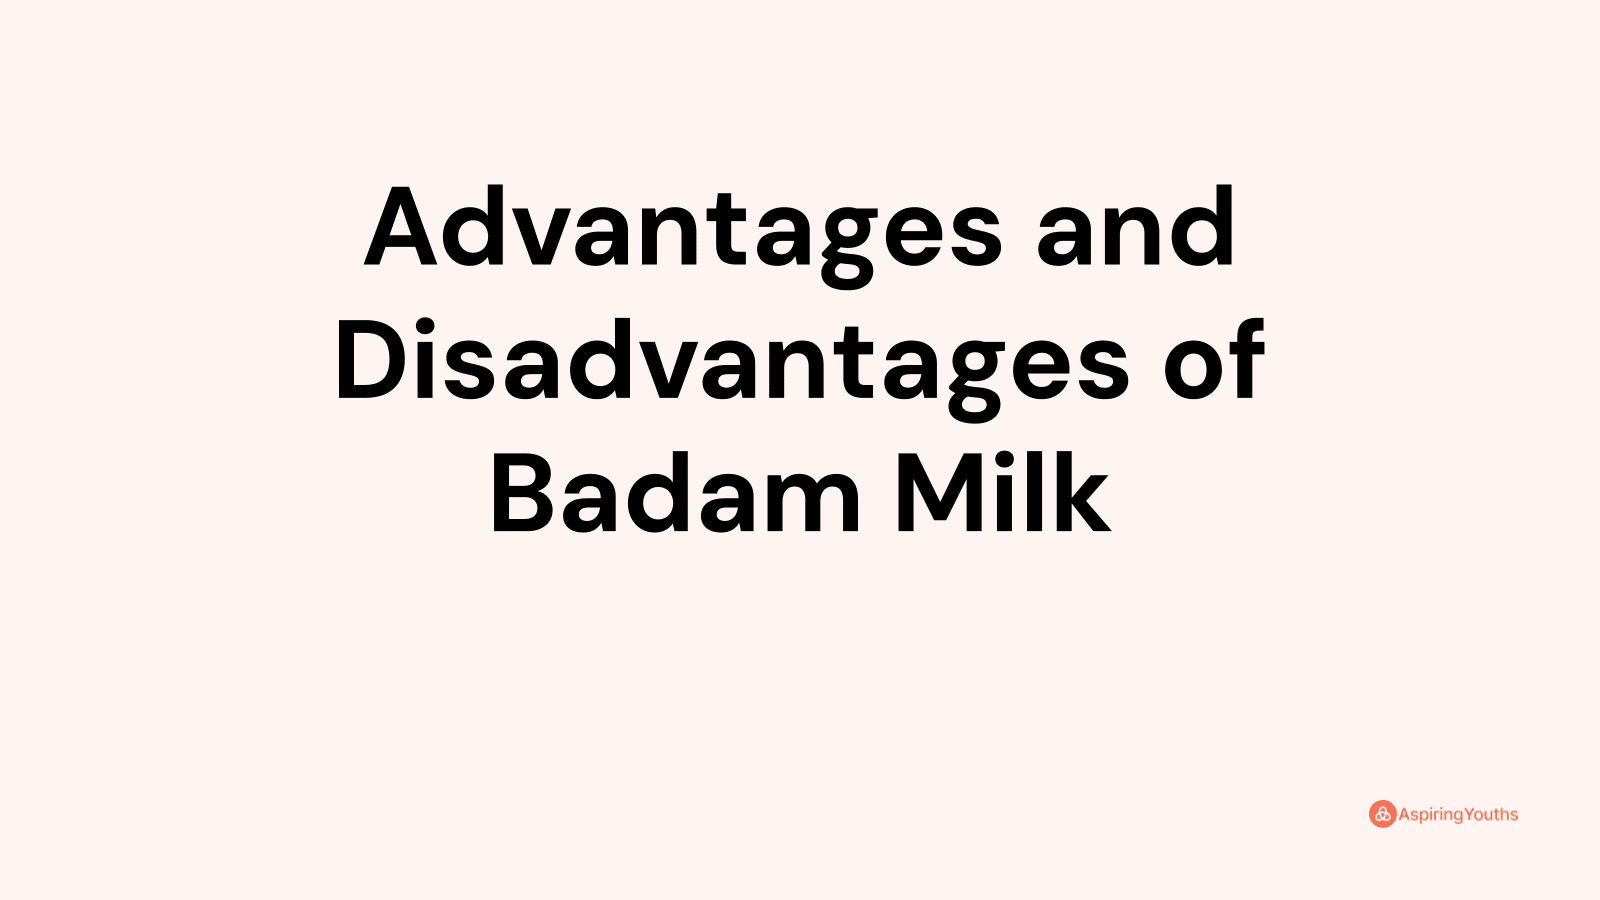 Advantages and disadvantages of Badam Milk